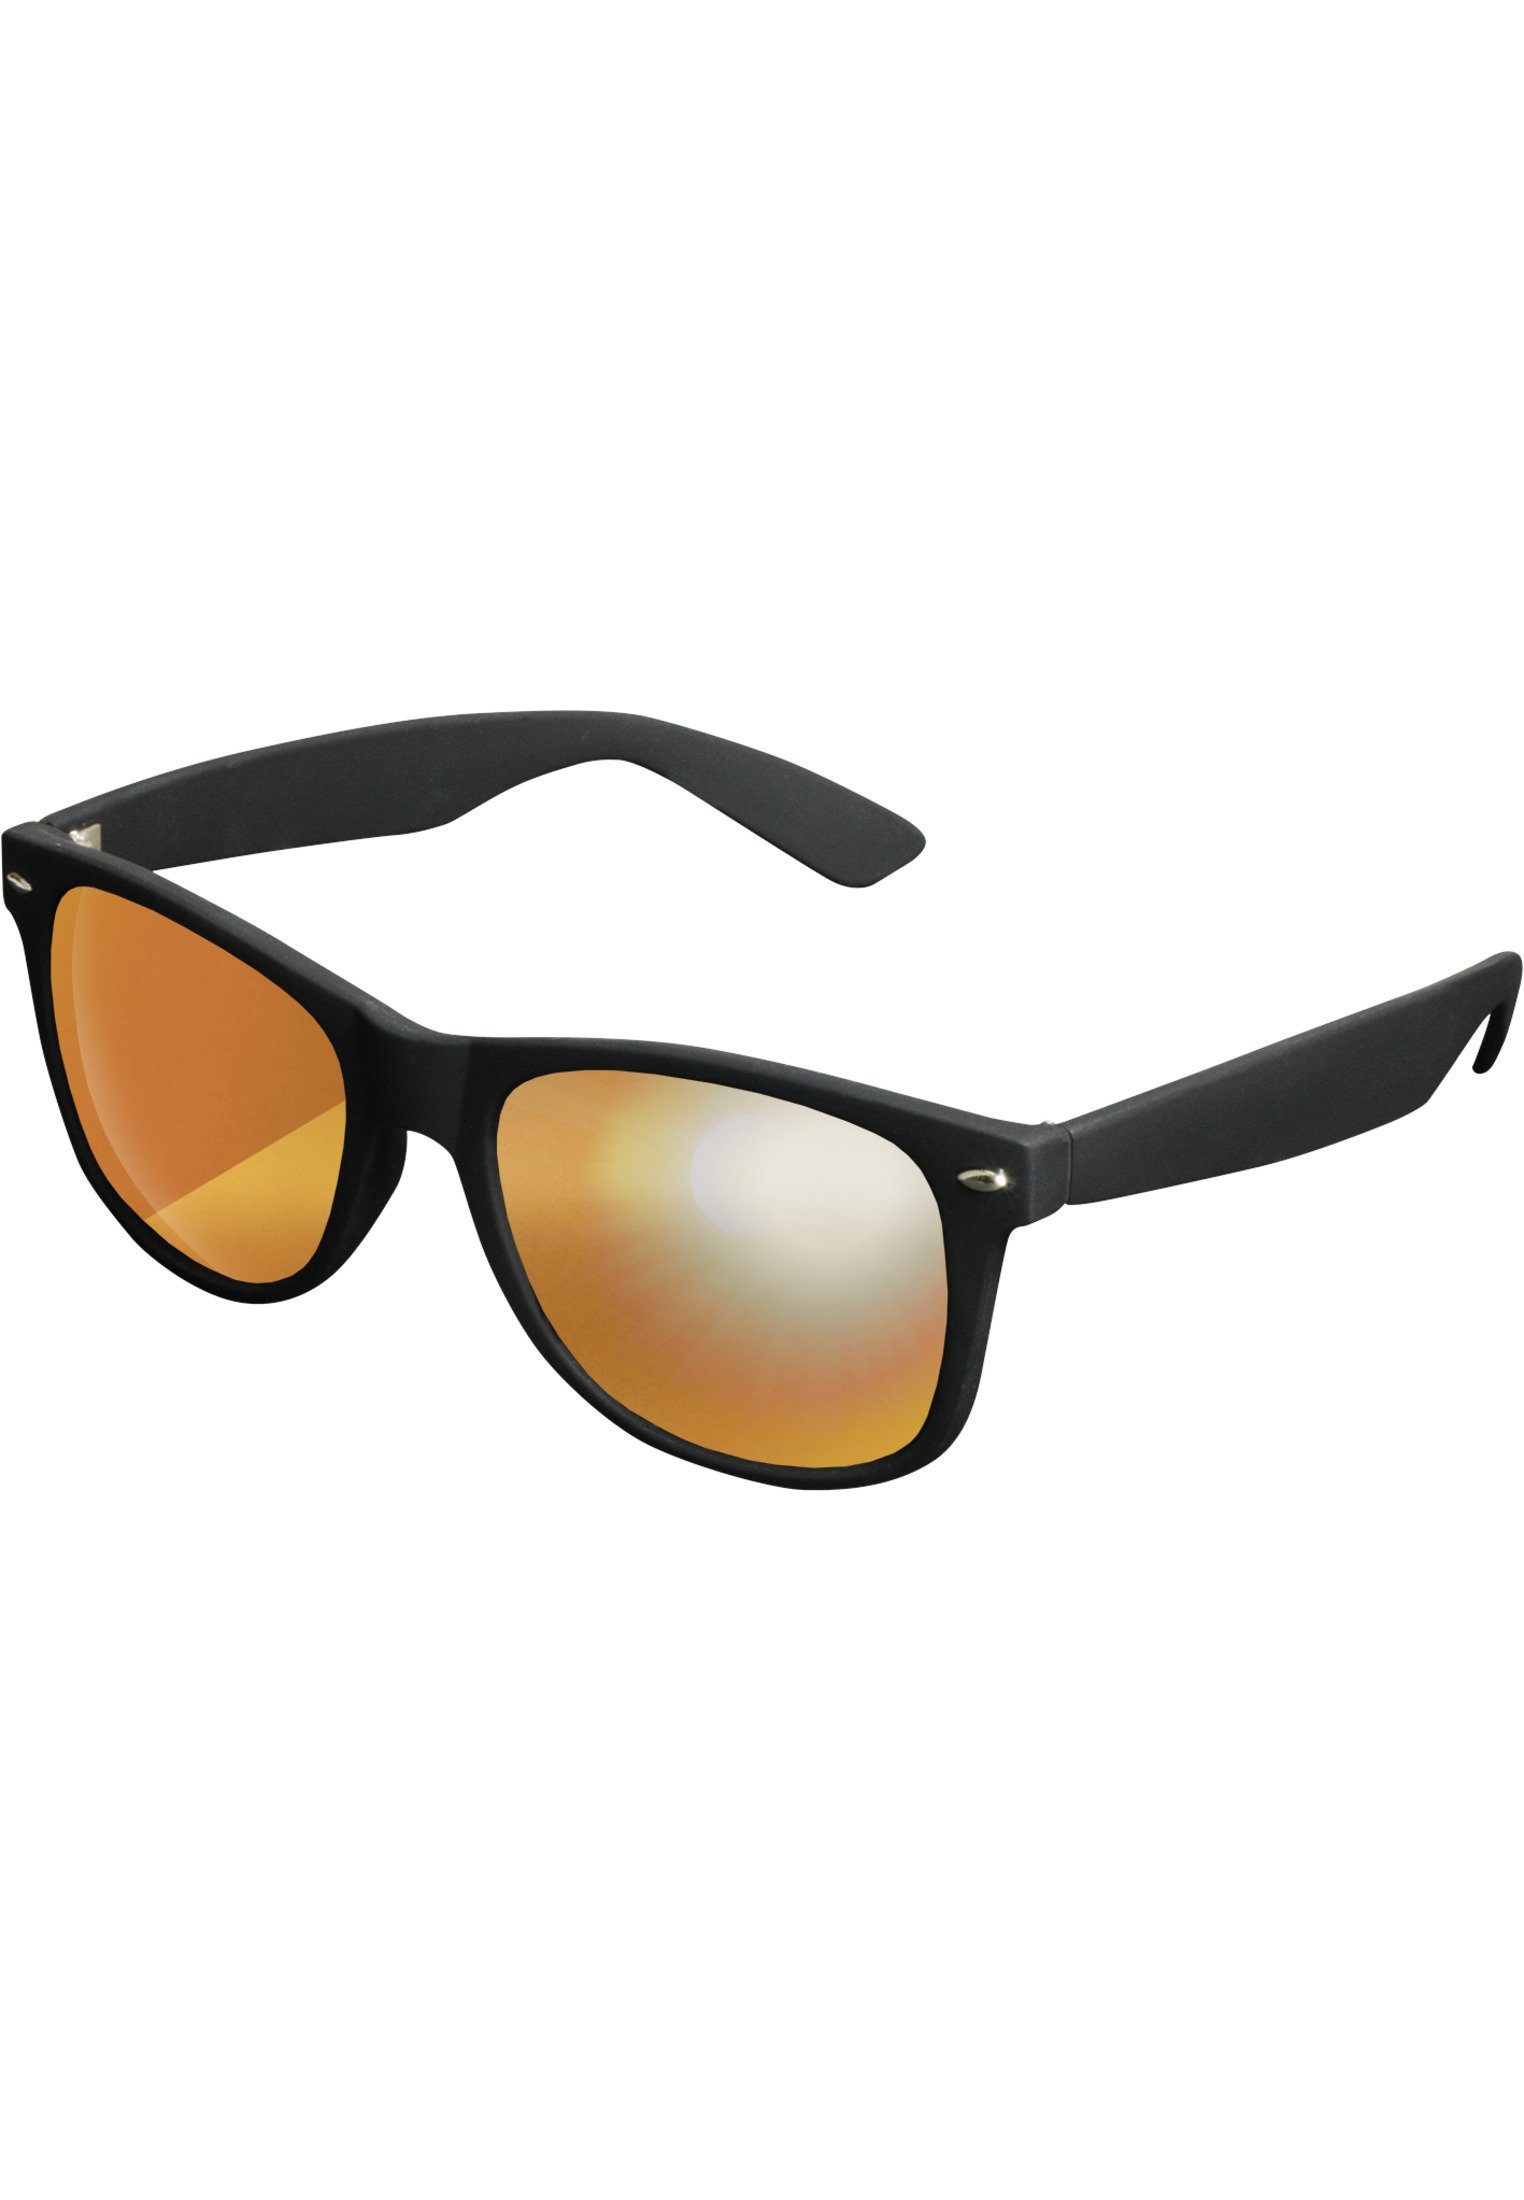 Accessoires Sunglasses Sonnenbrille Mirror blk/orange MSTRDS Likoma